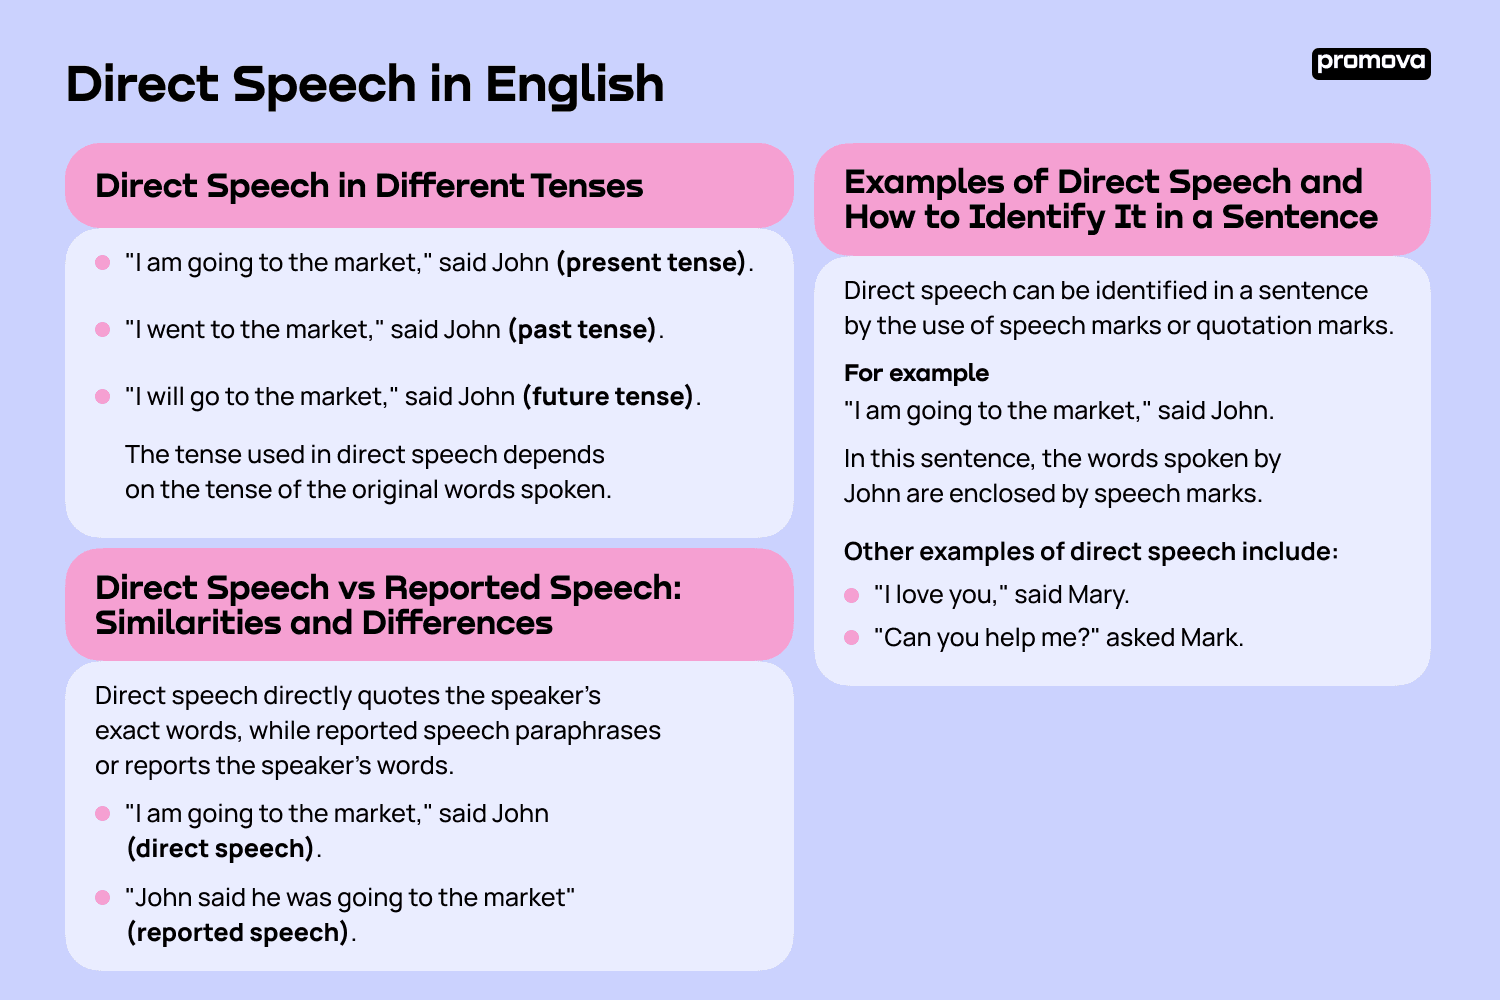 Direct Speech in Different Tenses